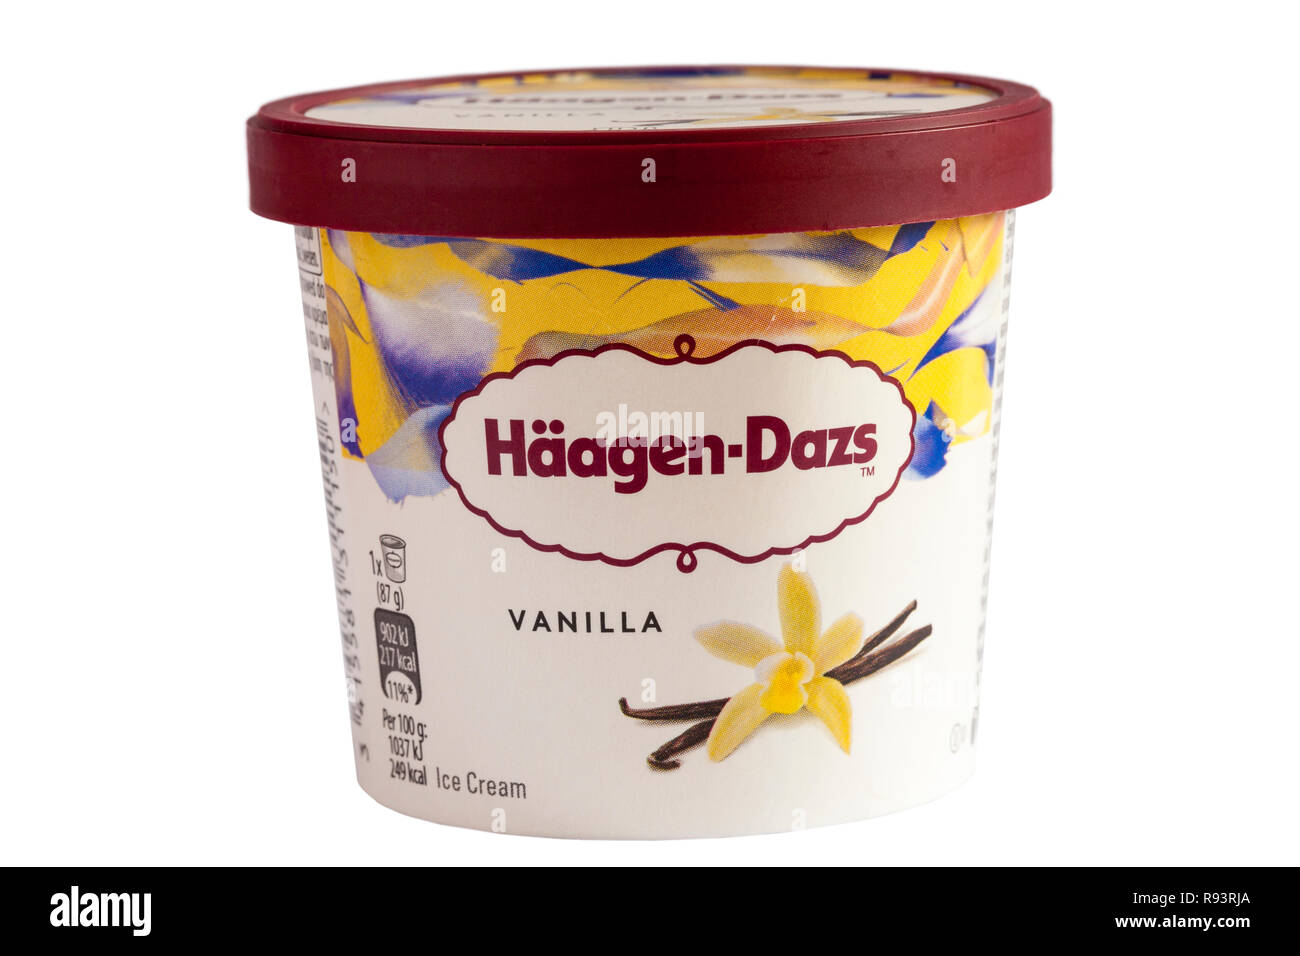 https://c8.alamy.com/comp/R93RJA/tub-of-haagen-dazs-vanilla-ice-cream-part-of-new-vanilla-collection-mini-cups-isolated-on-white-background-R93RJA.jpg